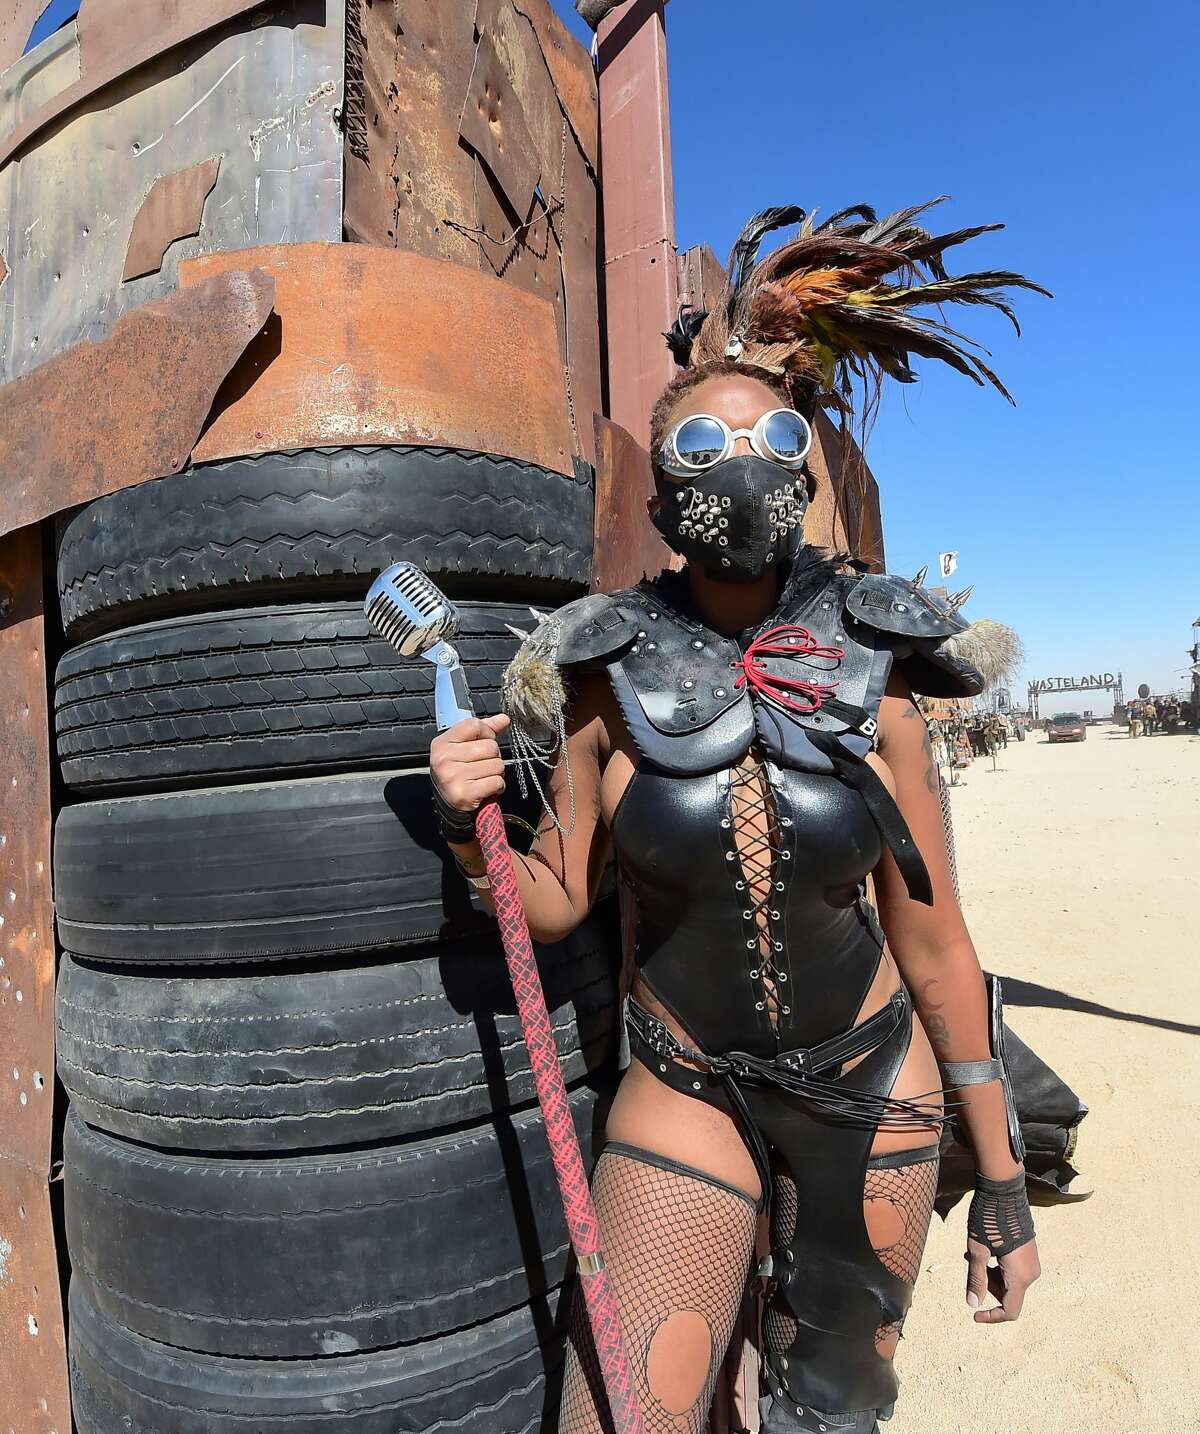 'Mad Max' fans descend on California desert for Wasteland Festival